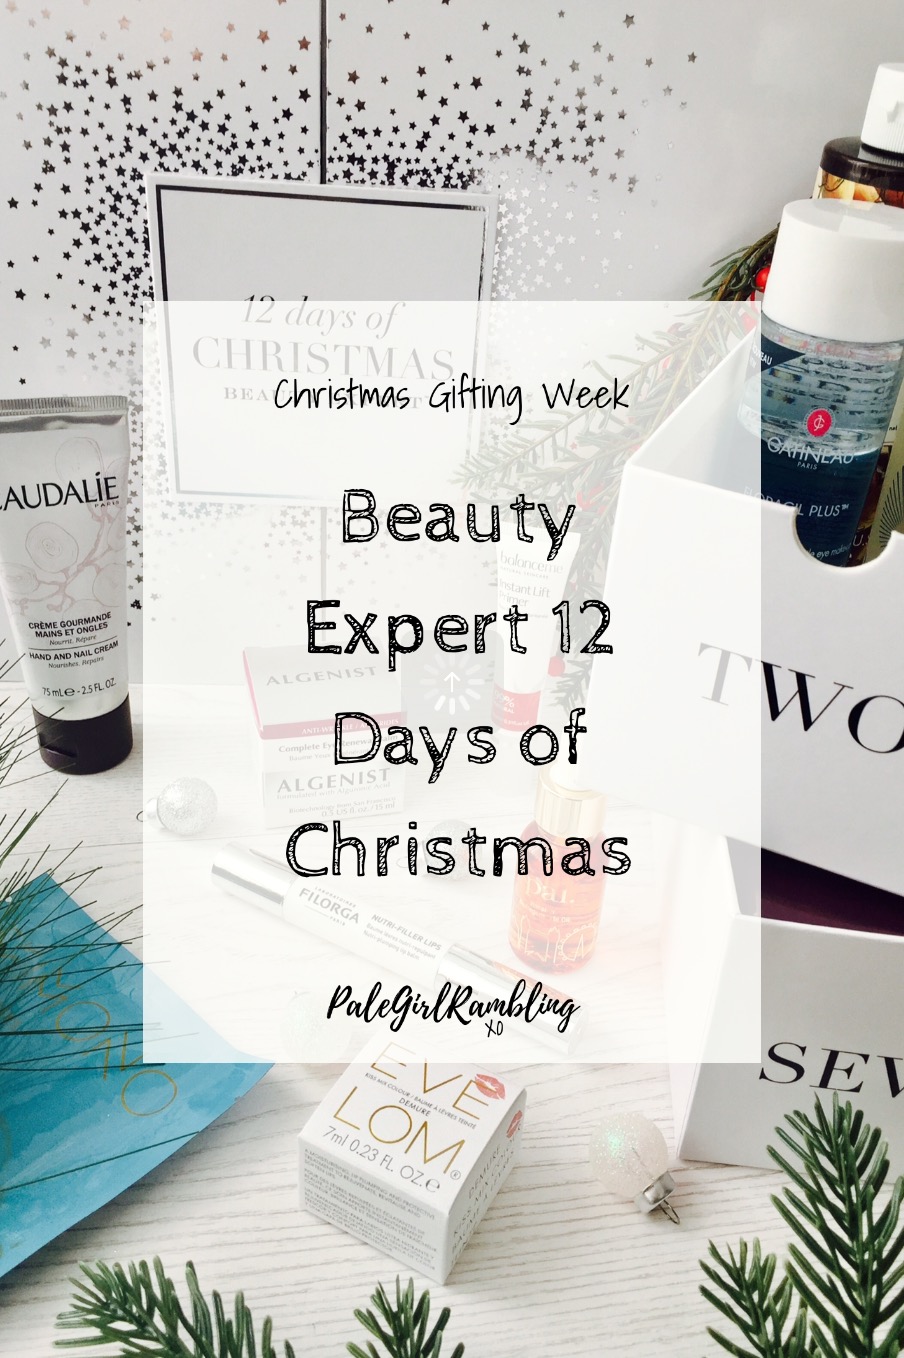 Beauty Expert 12 days of Christmas advent calendar